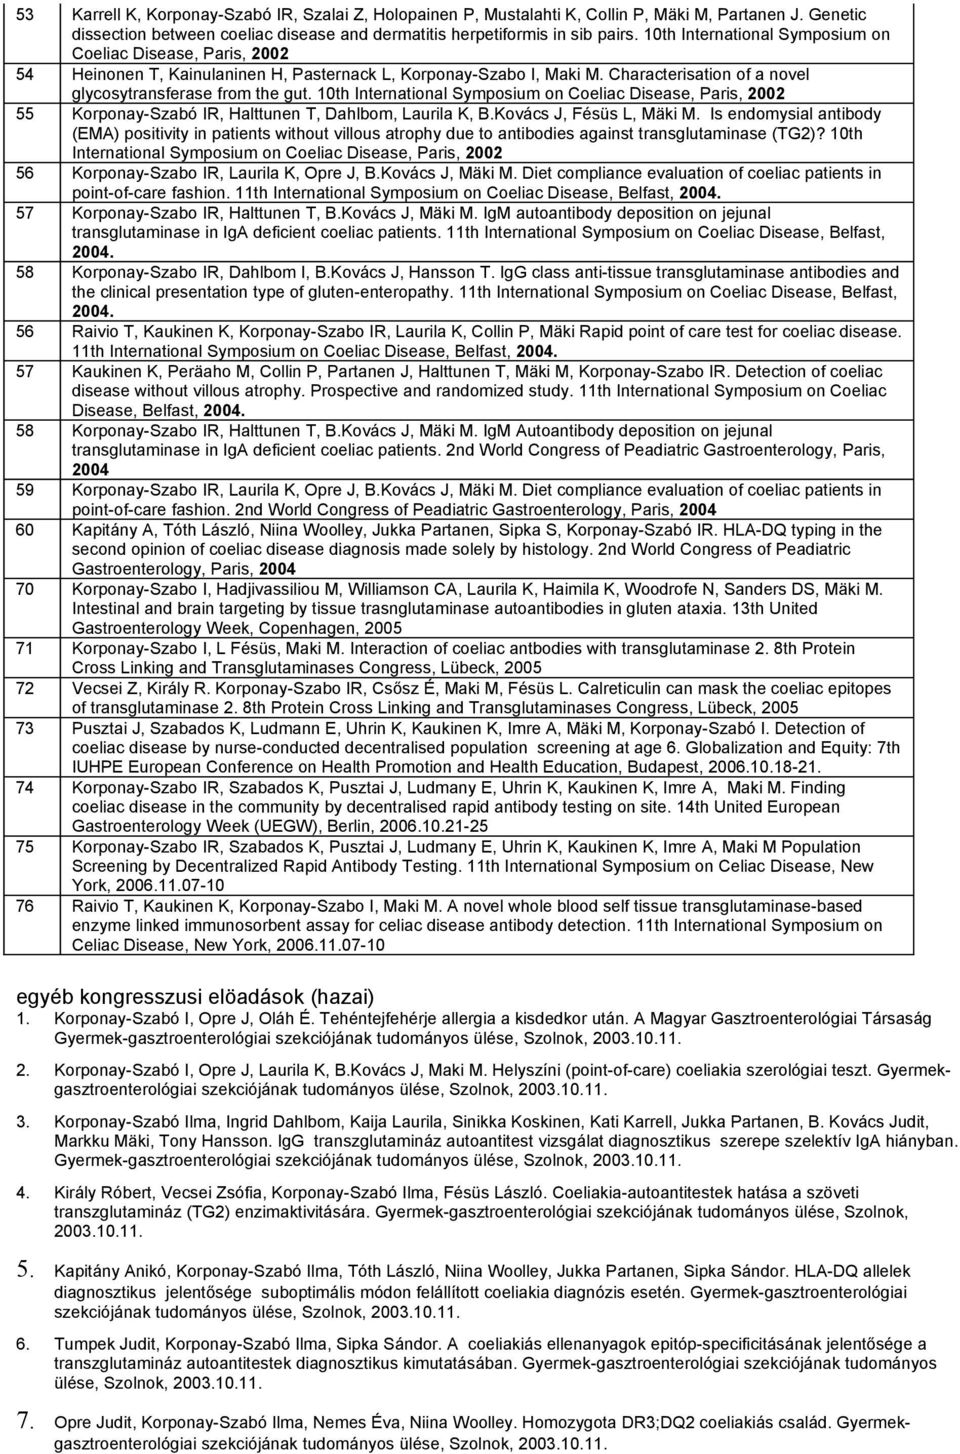 10th International Symposium on Coeliac Disease, Paris, 2002 55 Korponay-Szabó IR, Halttunen T, Dahlbom, Laurila K, B.Kovács J, Fésüs L, Mäki M.